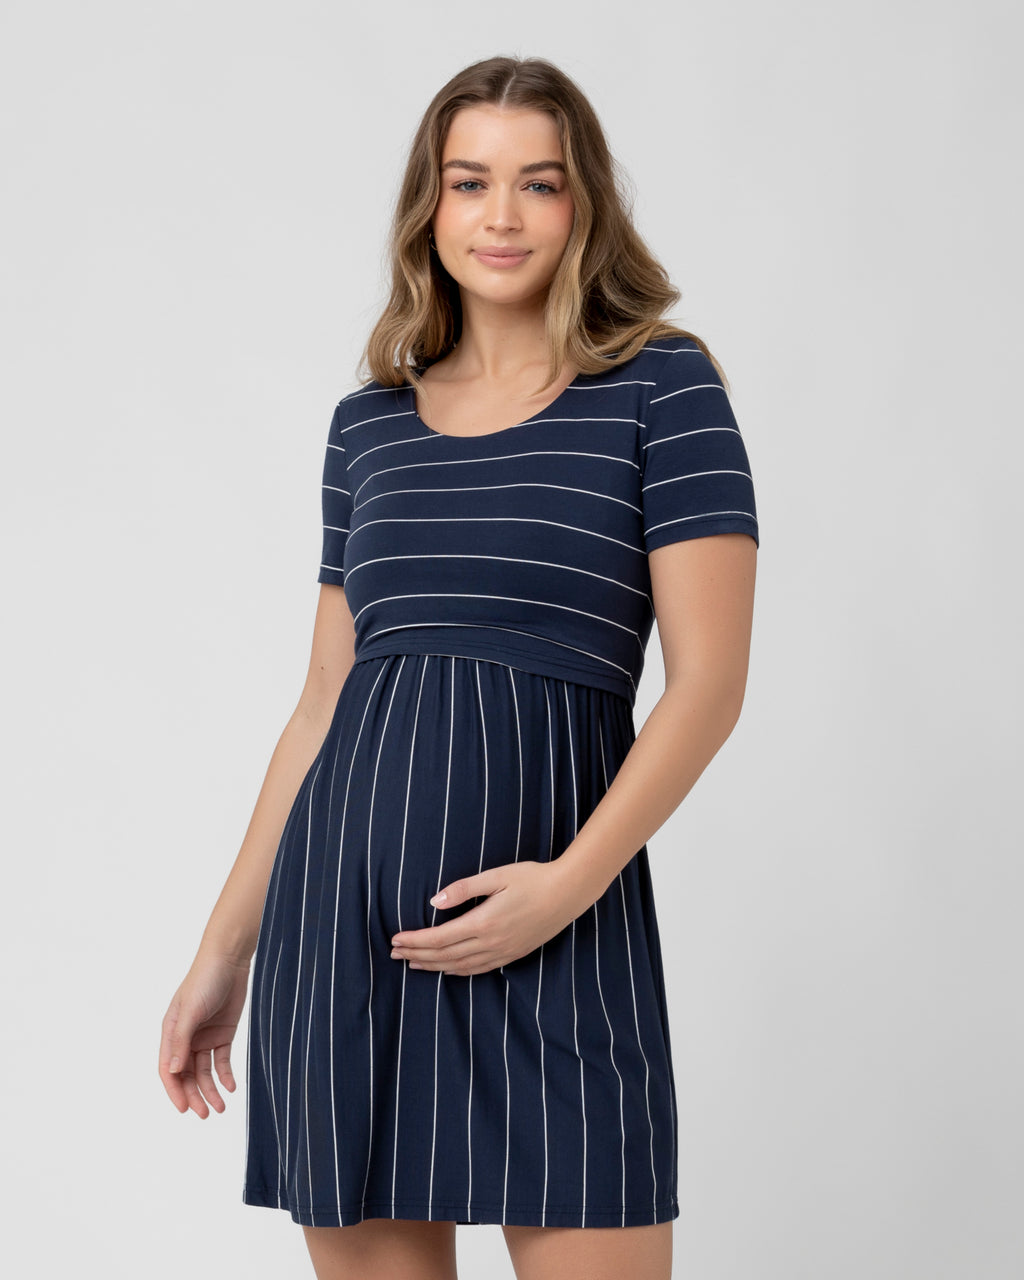 Ripe Maternity Maternity Crop Top St Nursing Dress - Macy's